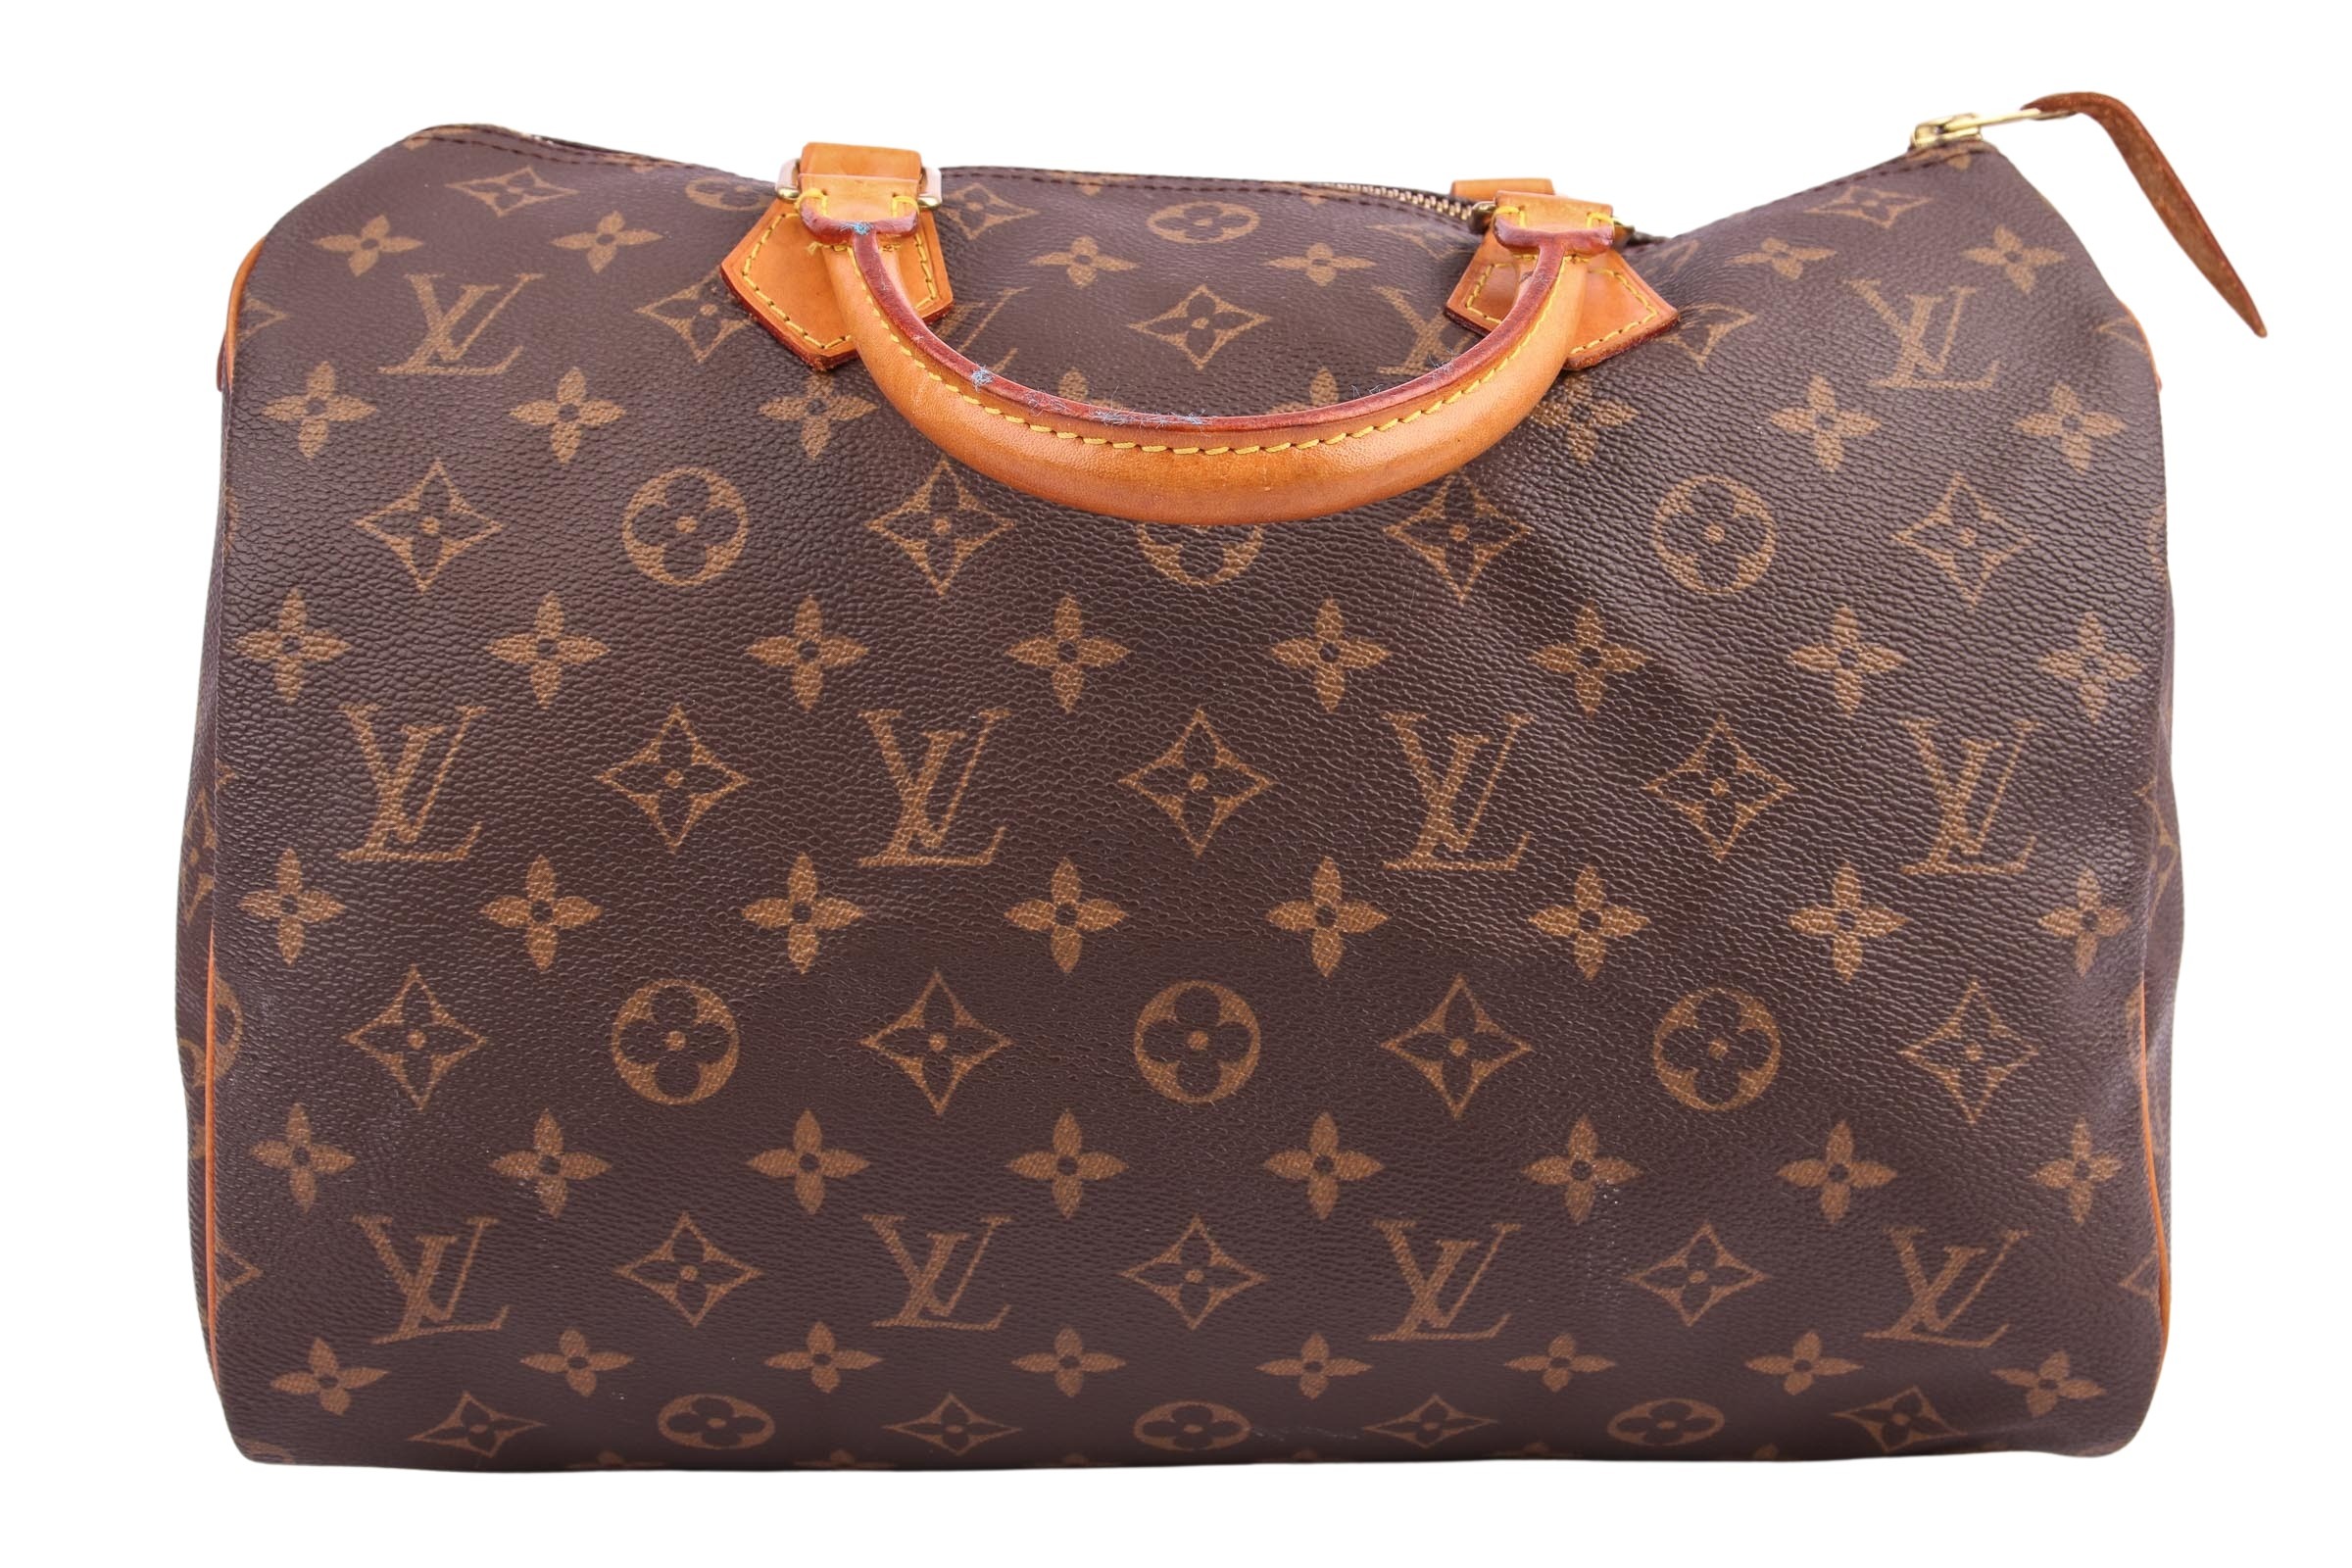 Audrey Hepburn w/ Louis Vuitton bag